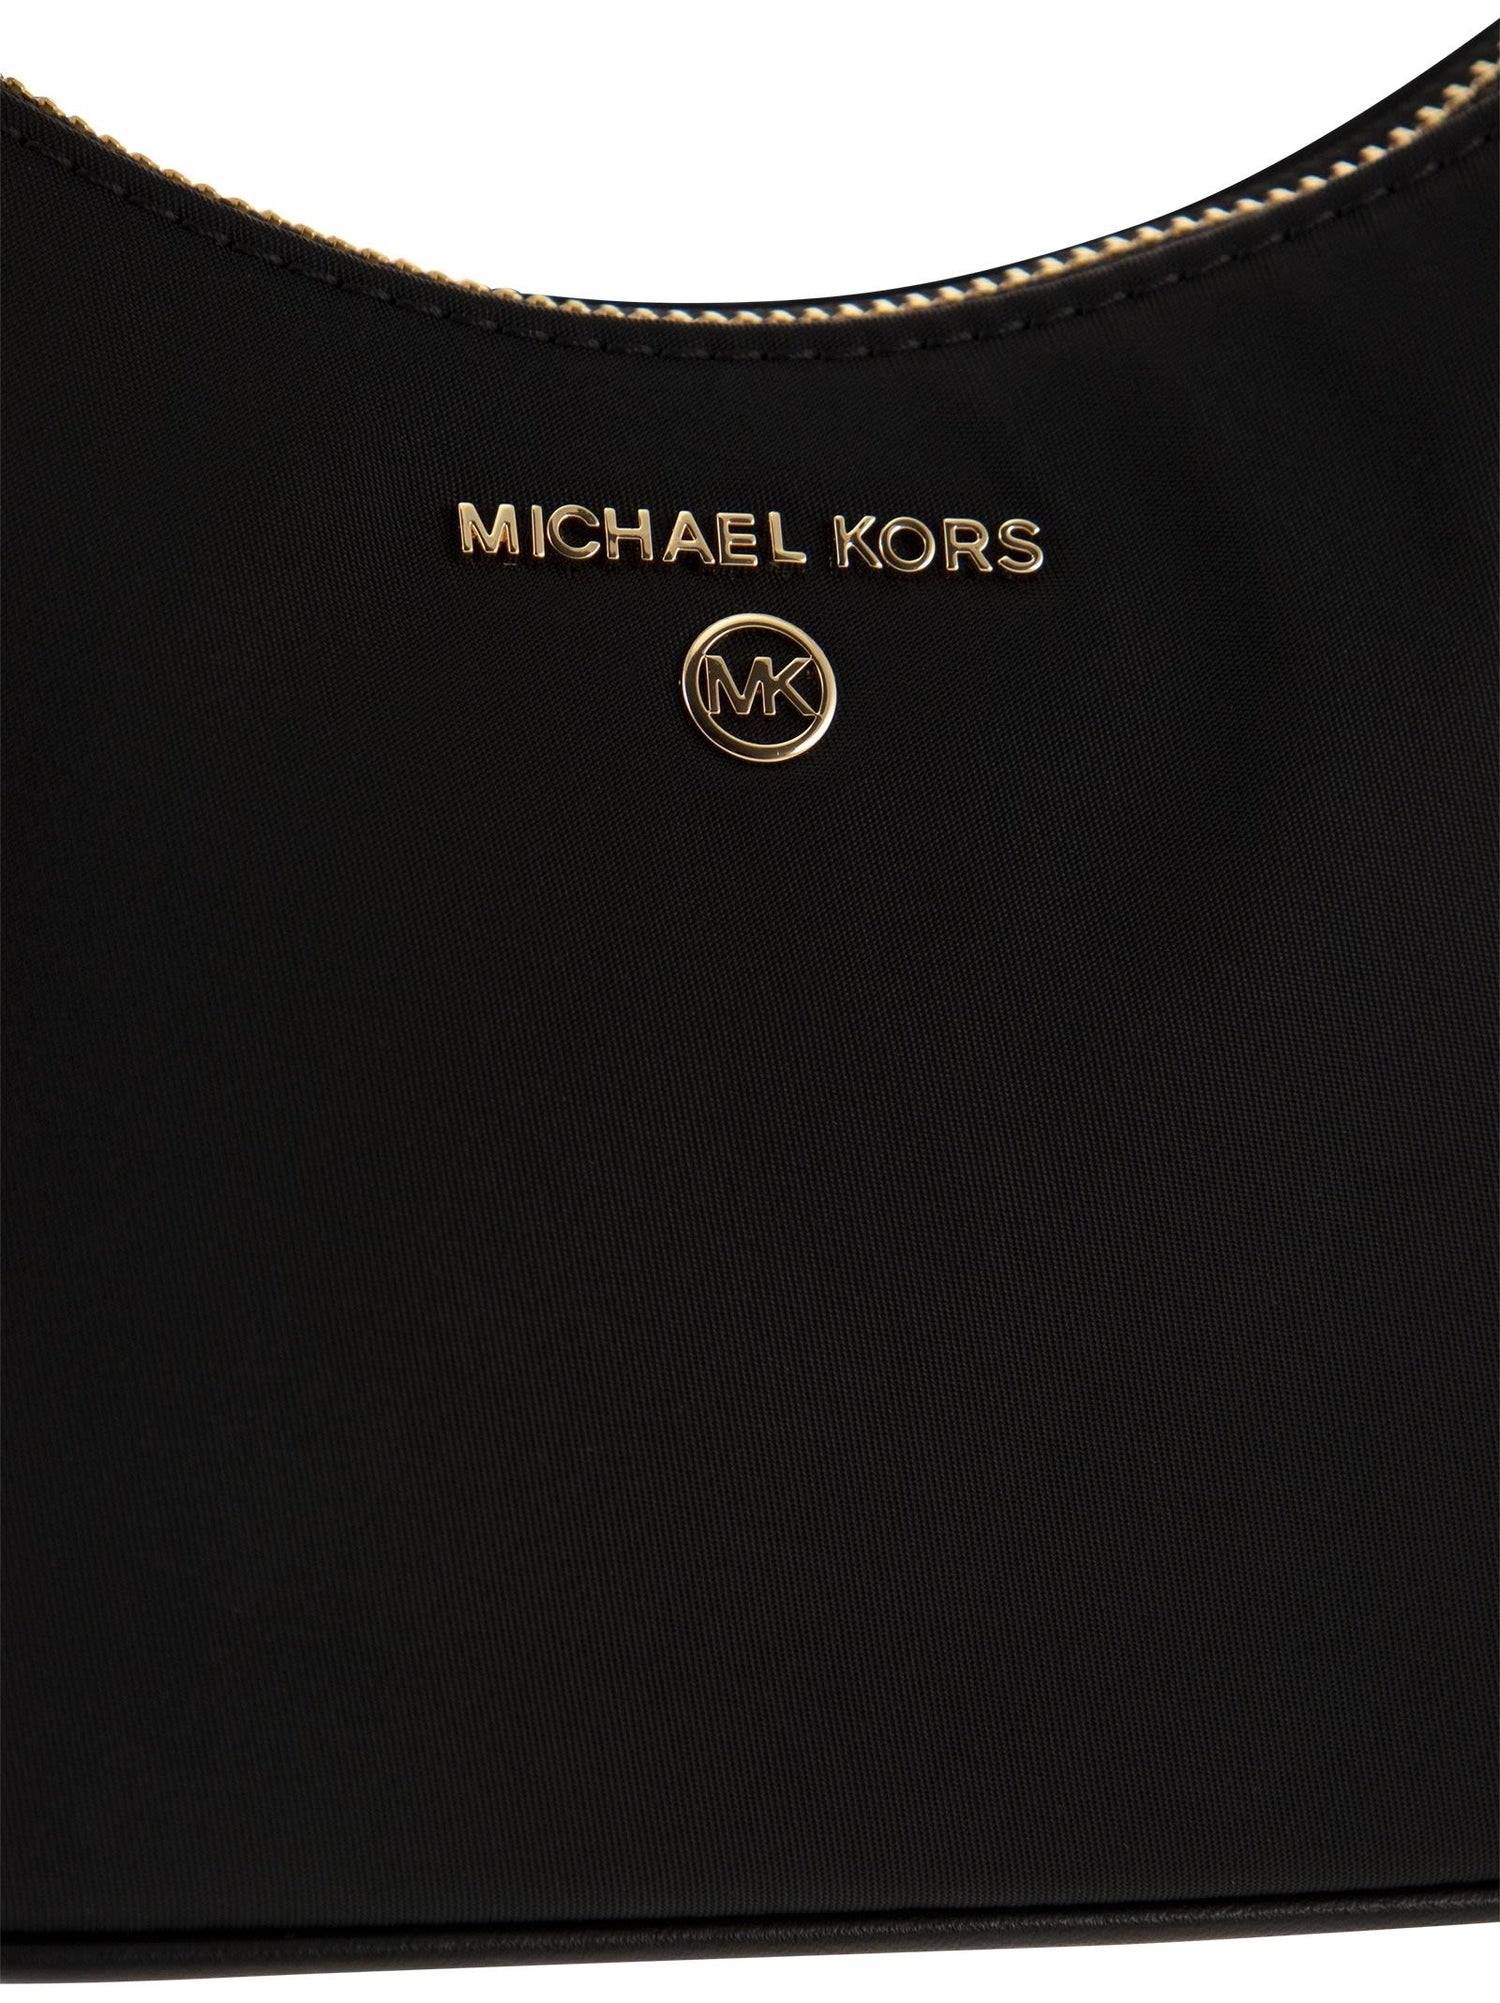 Buy Michael Kors Jet Set Charm Large Pouchette - Black